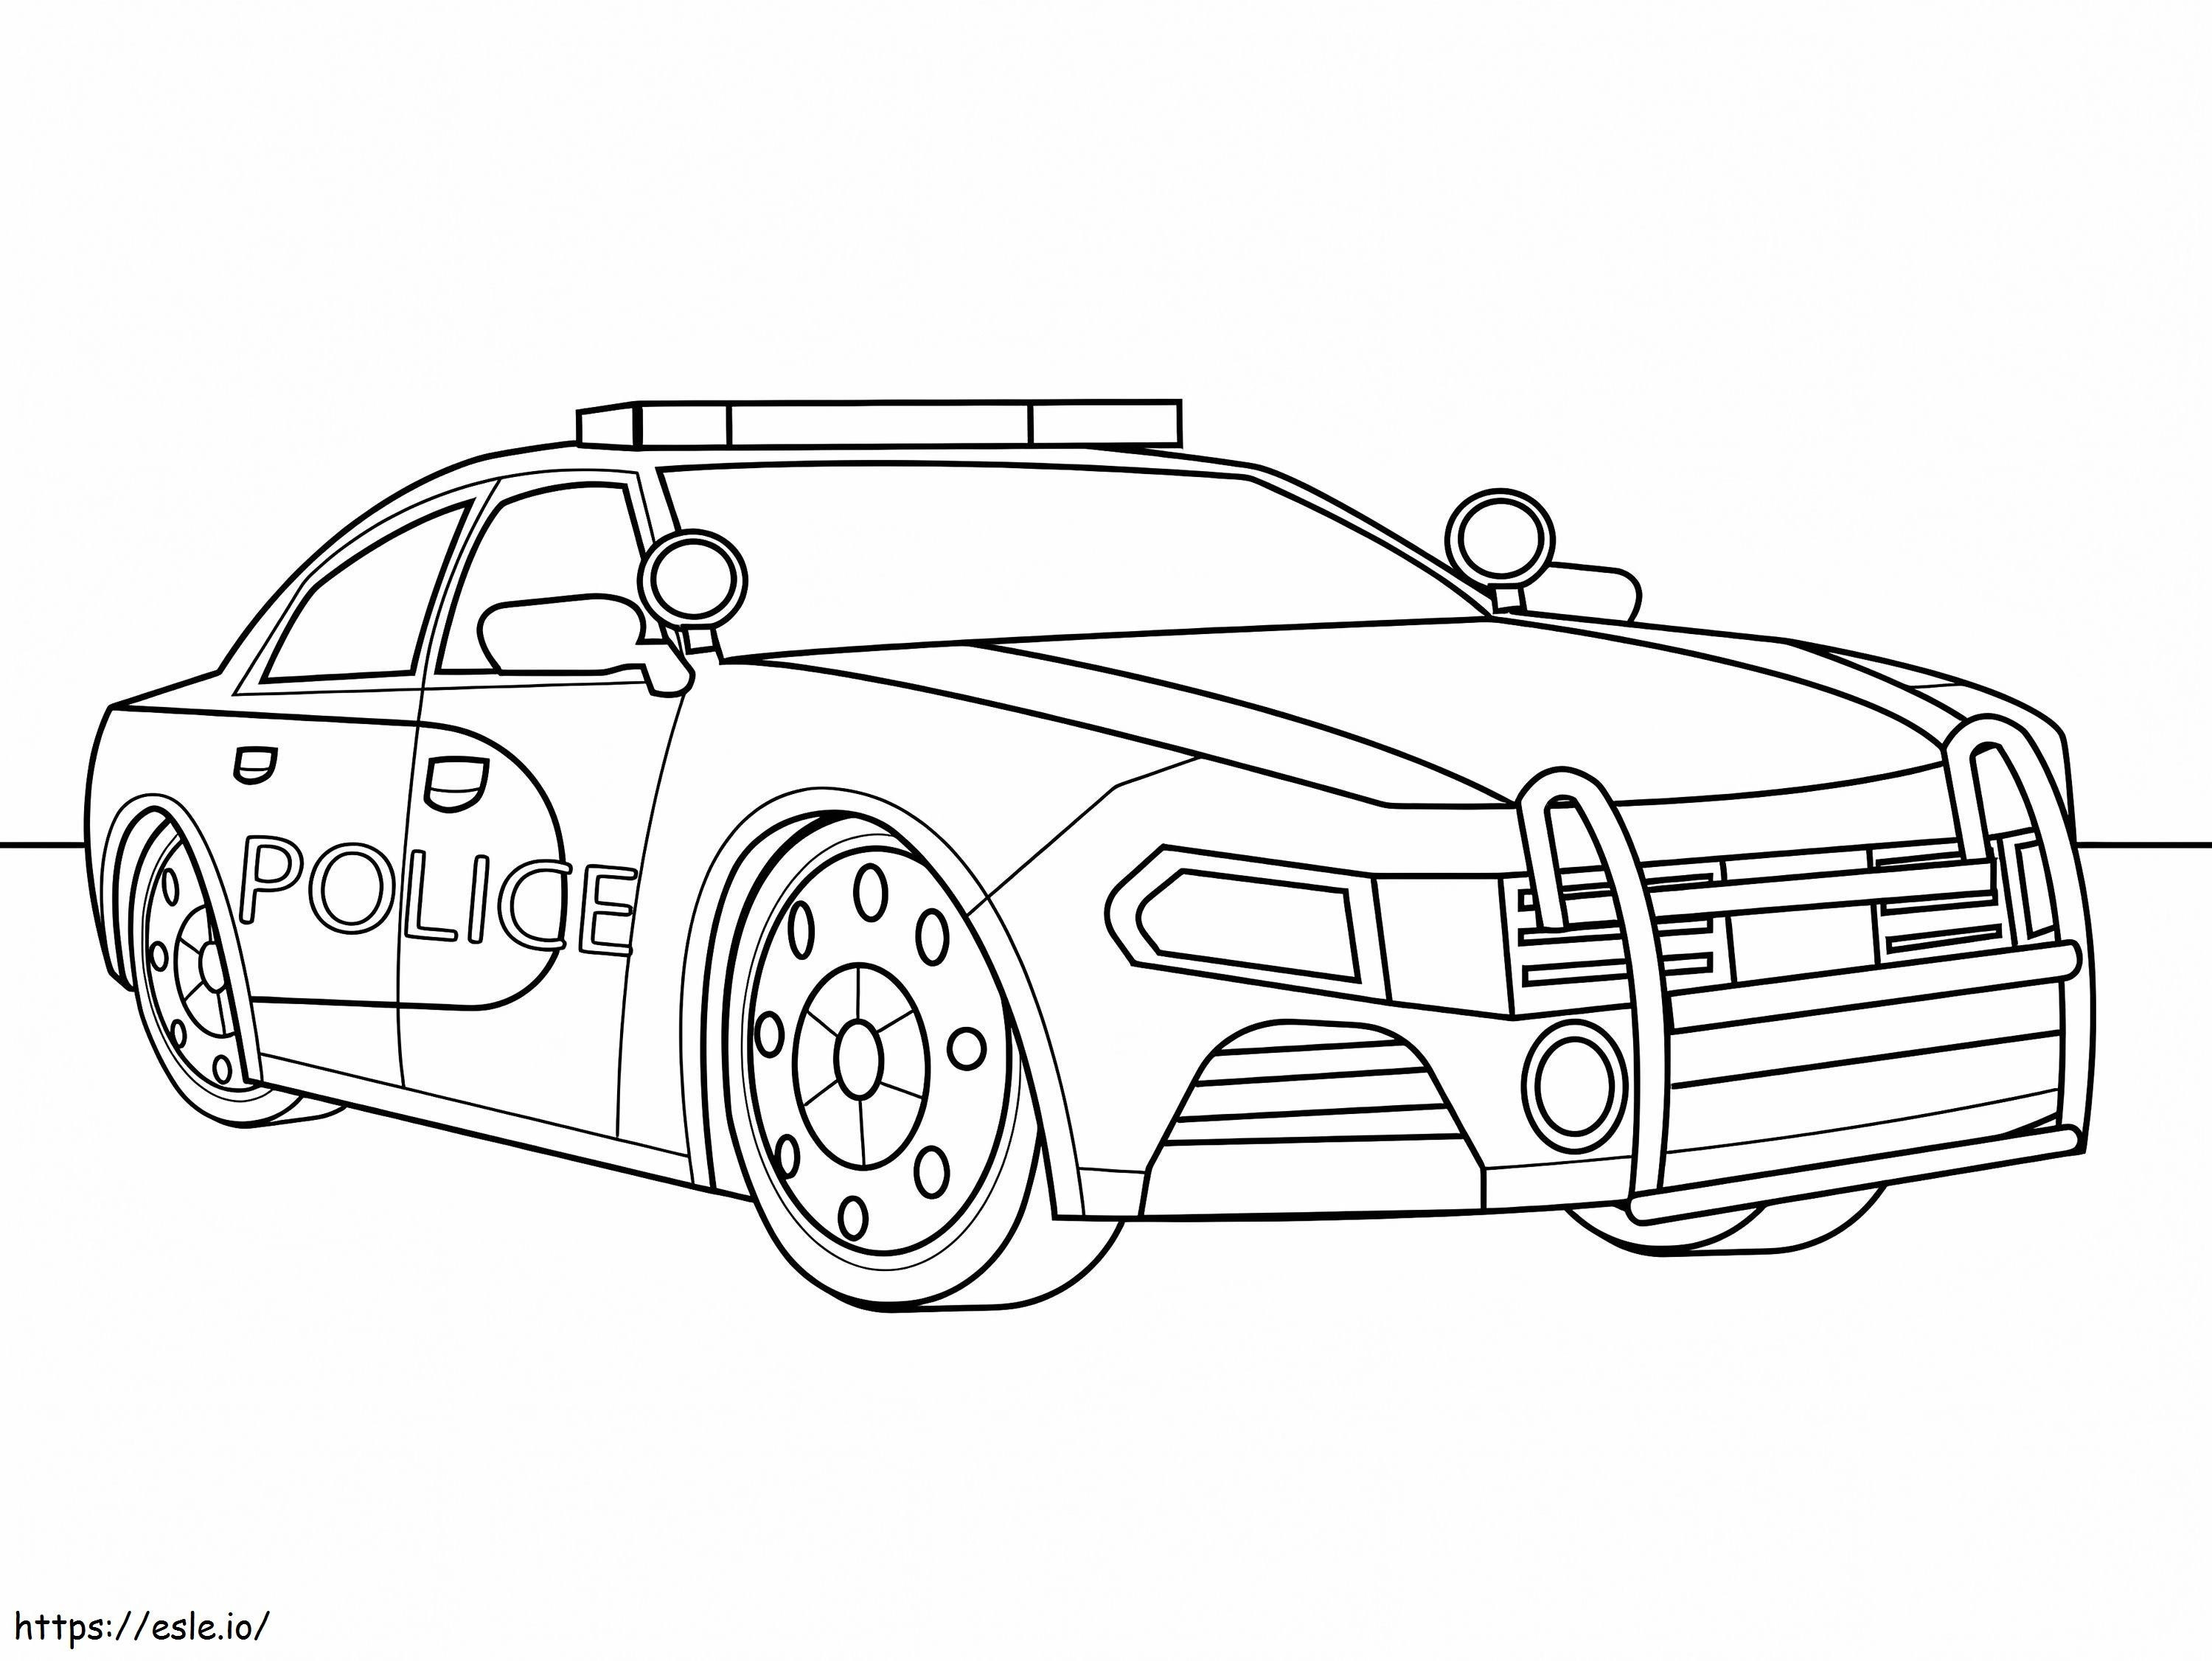 Carro de polícia esportivo para colorir